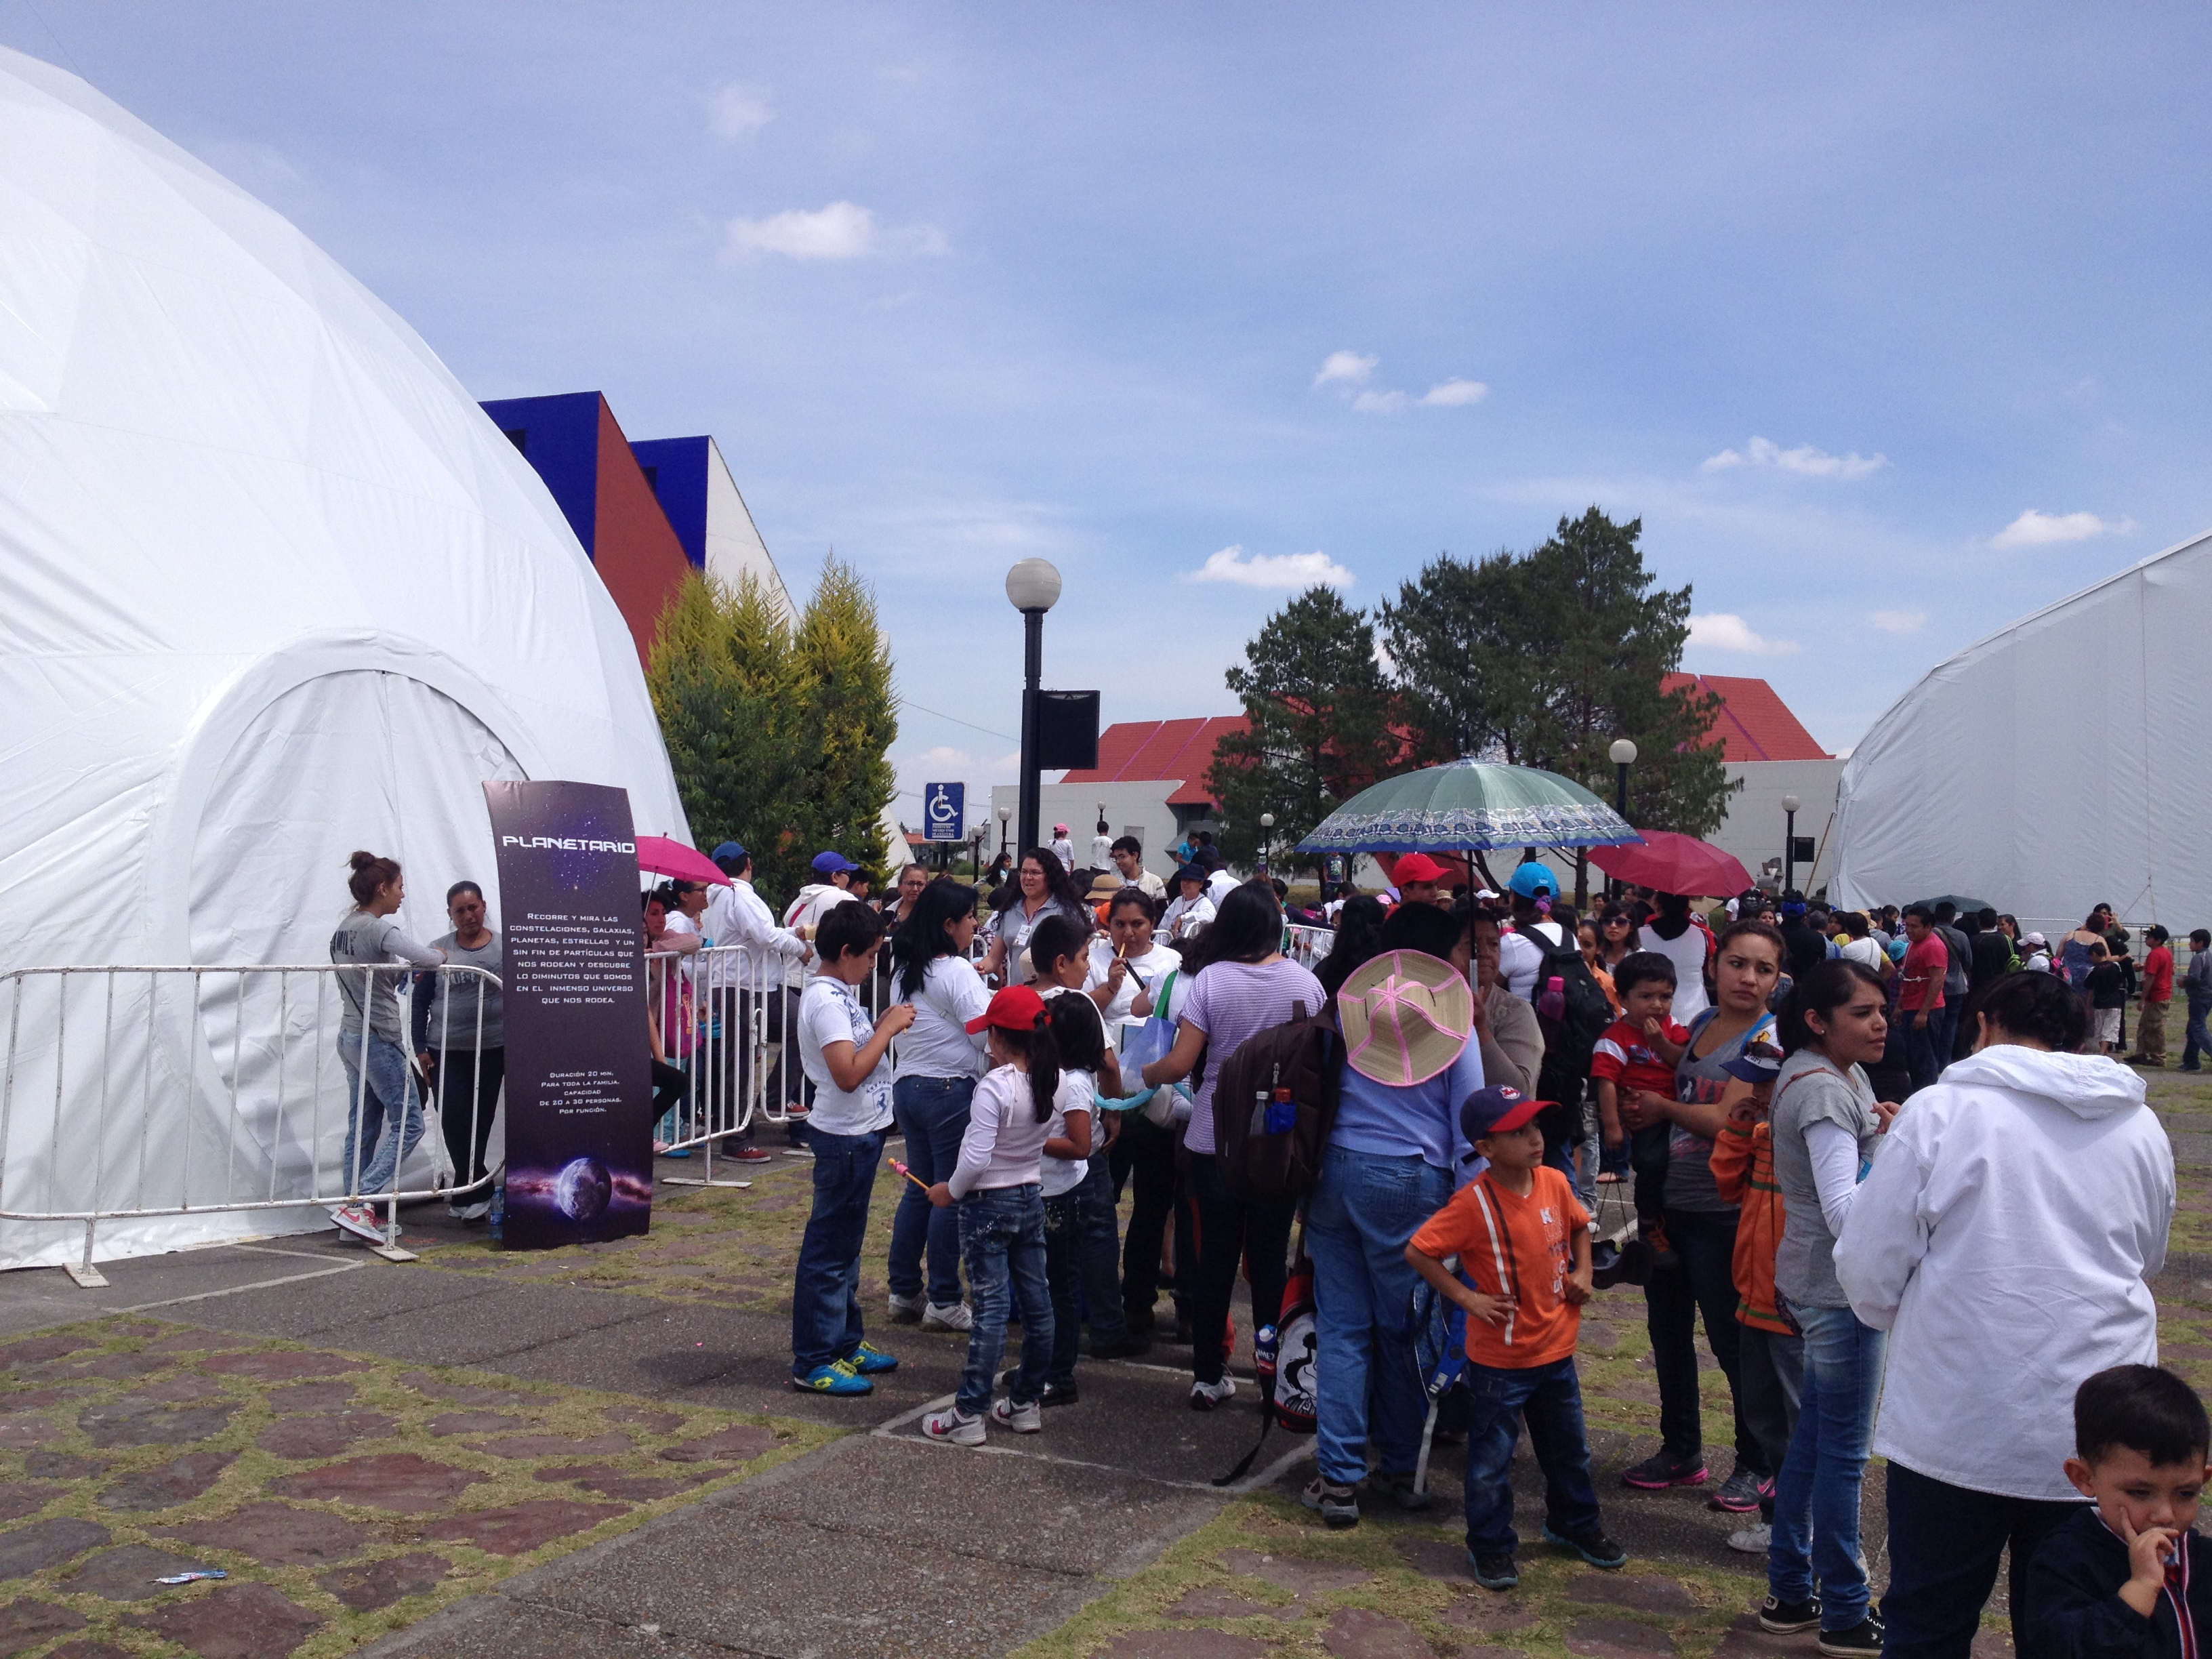 Funcion de Planetario en Festival FestinArte Toluca